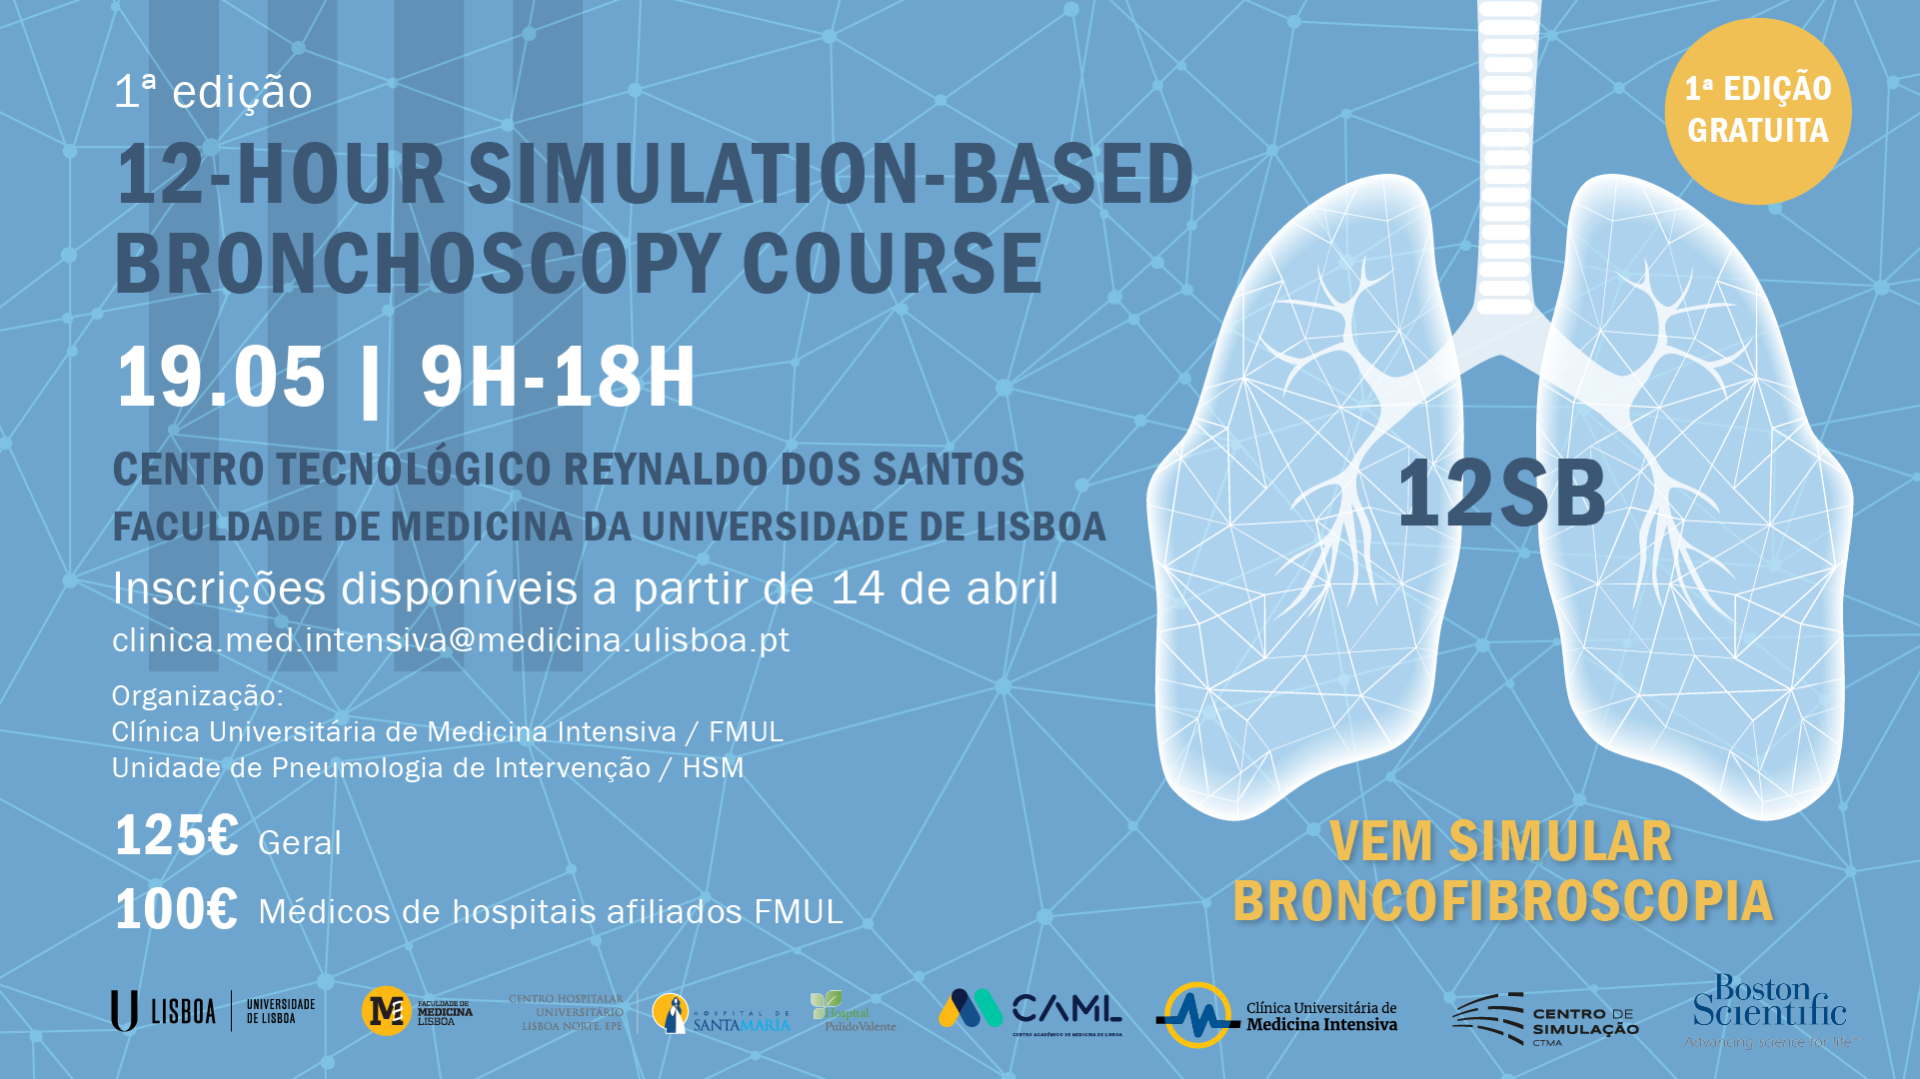 12-hour simulation-based bronchoscopy course